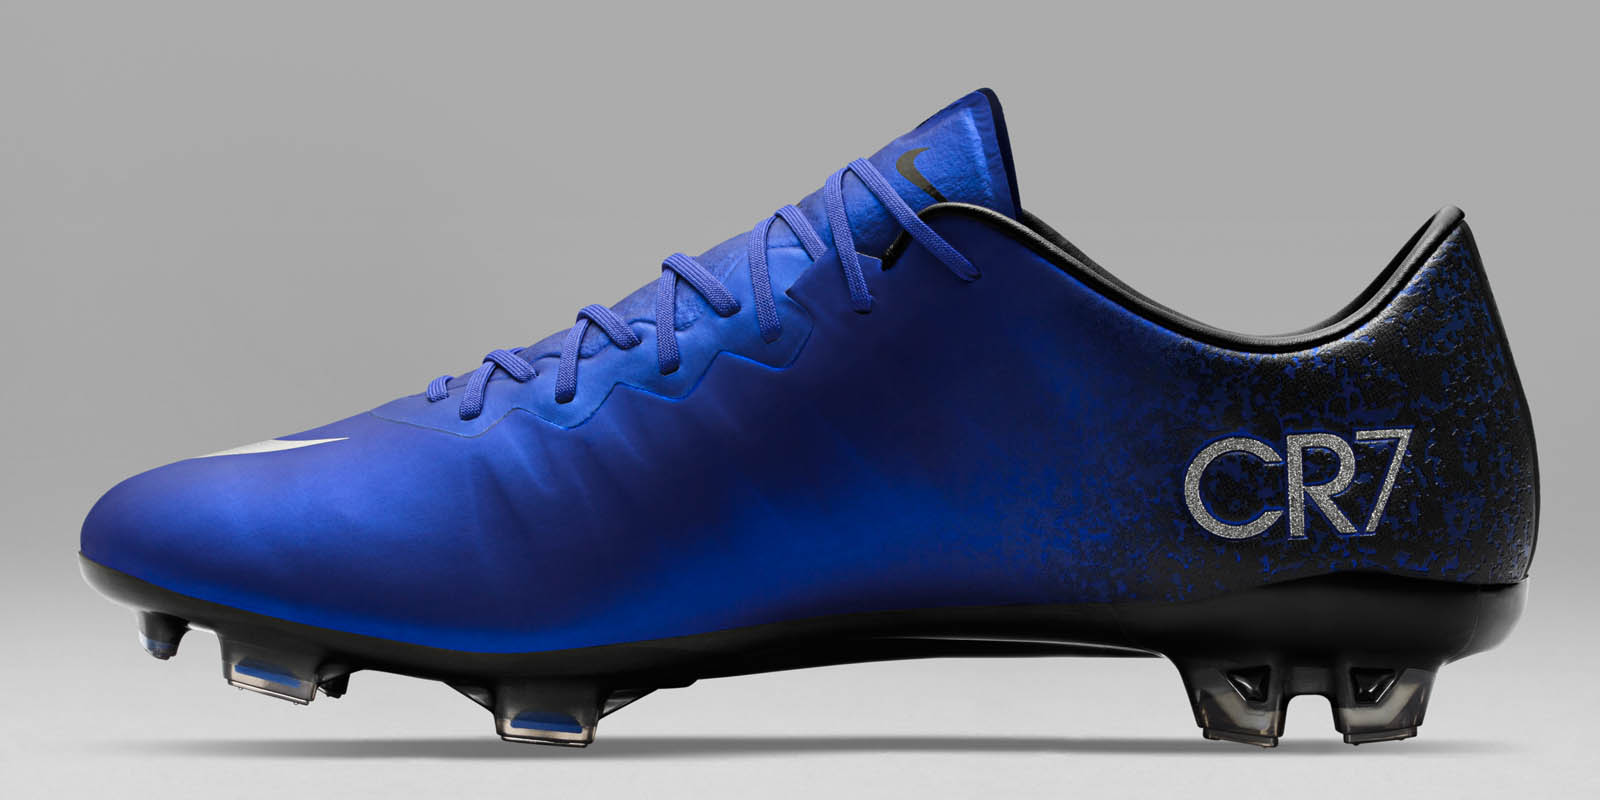 Blue Nike Mercurial Vapor Ronaldo 2016 Diamond Boots Released Footy Headlines